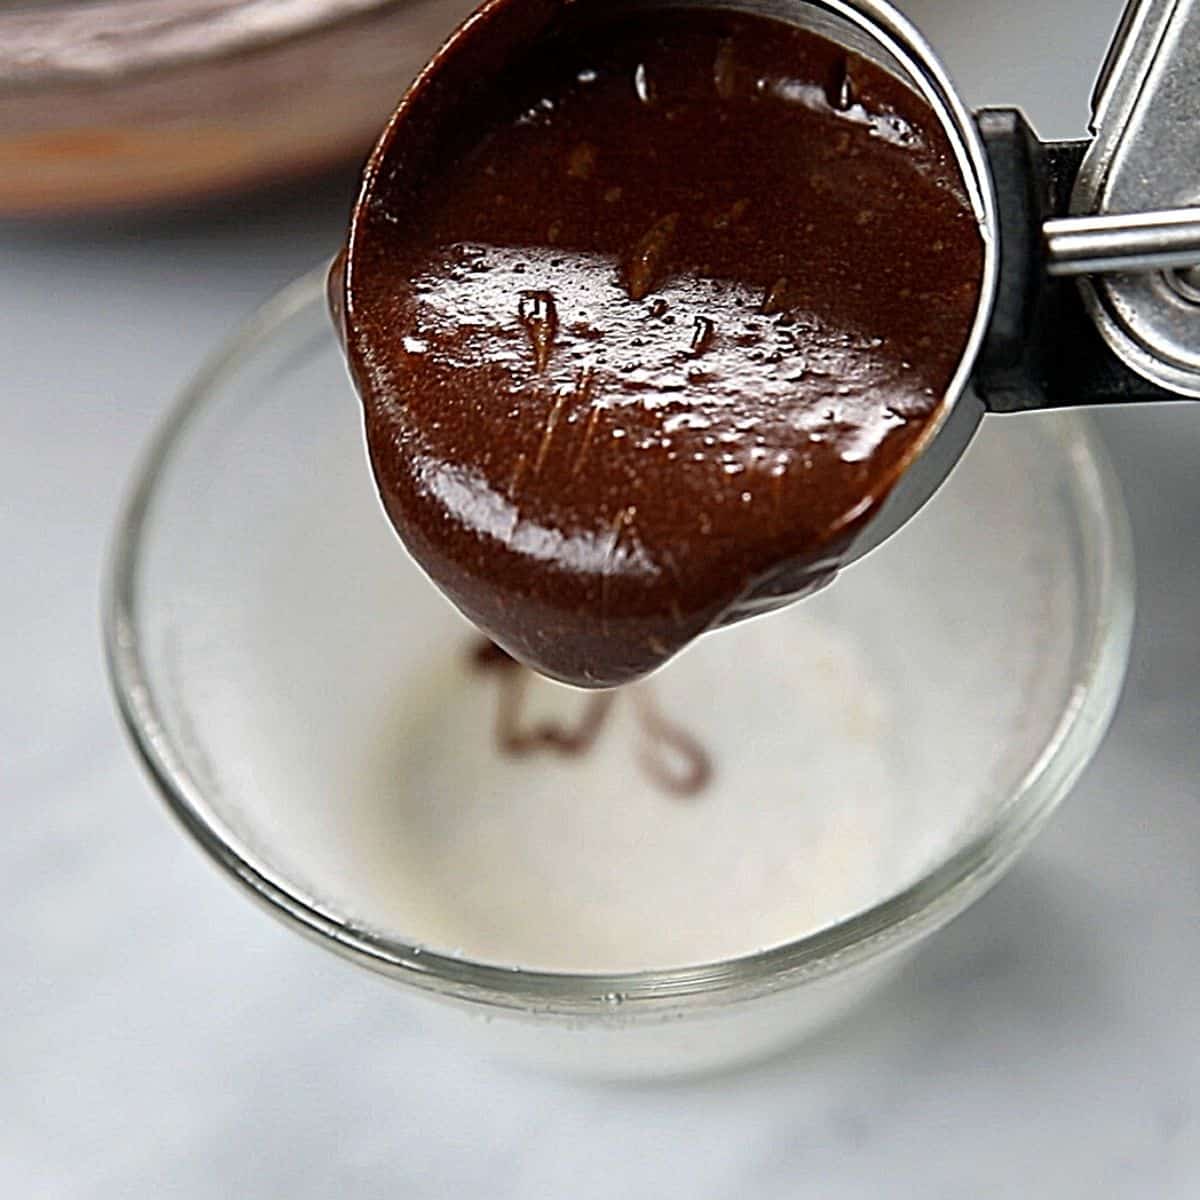 An ice scream scooping chocolate batter into ramekins.